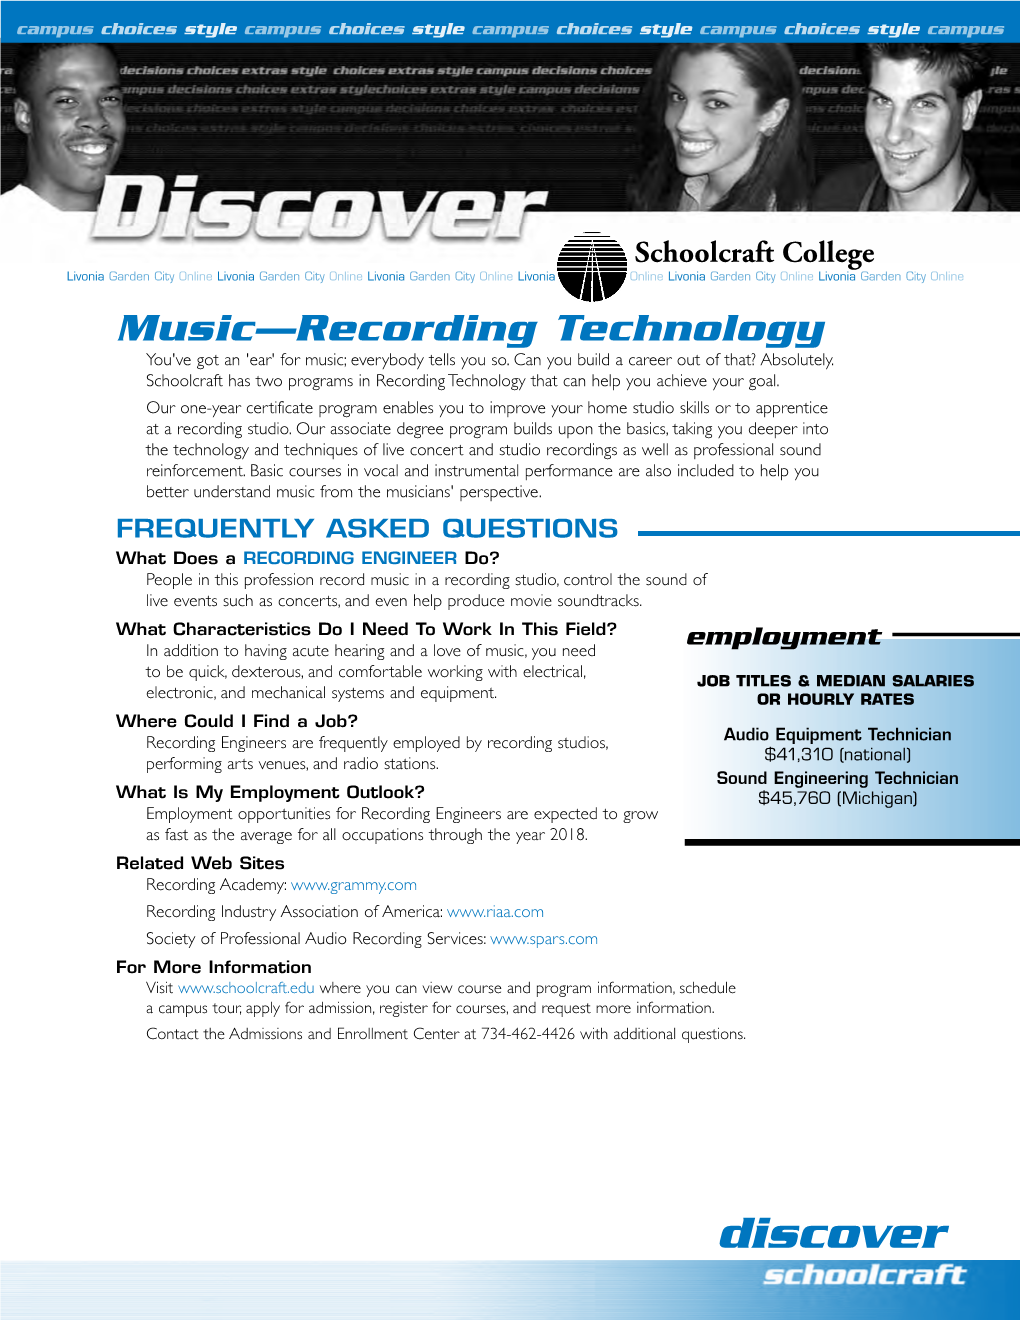 Music Recording Technology Program at Schoolcraft College